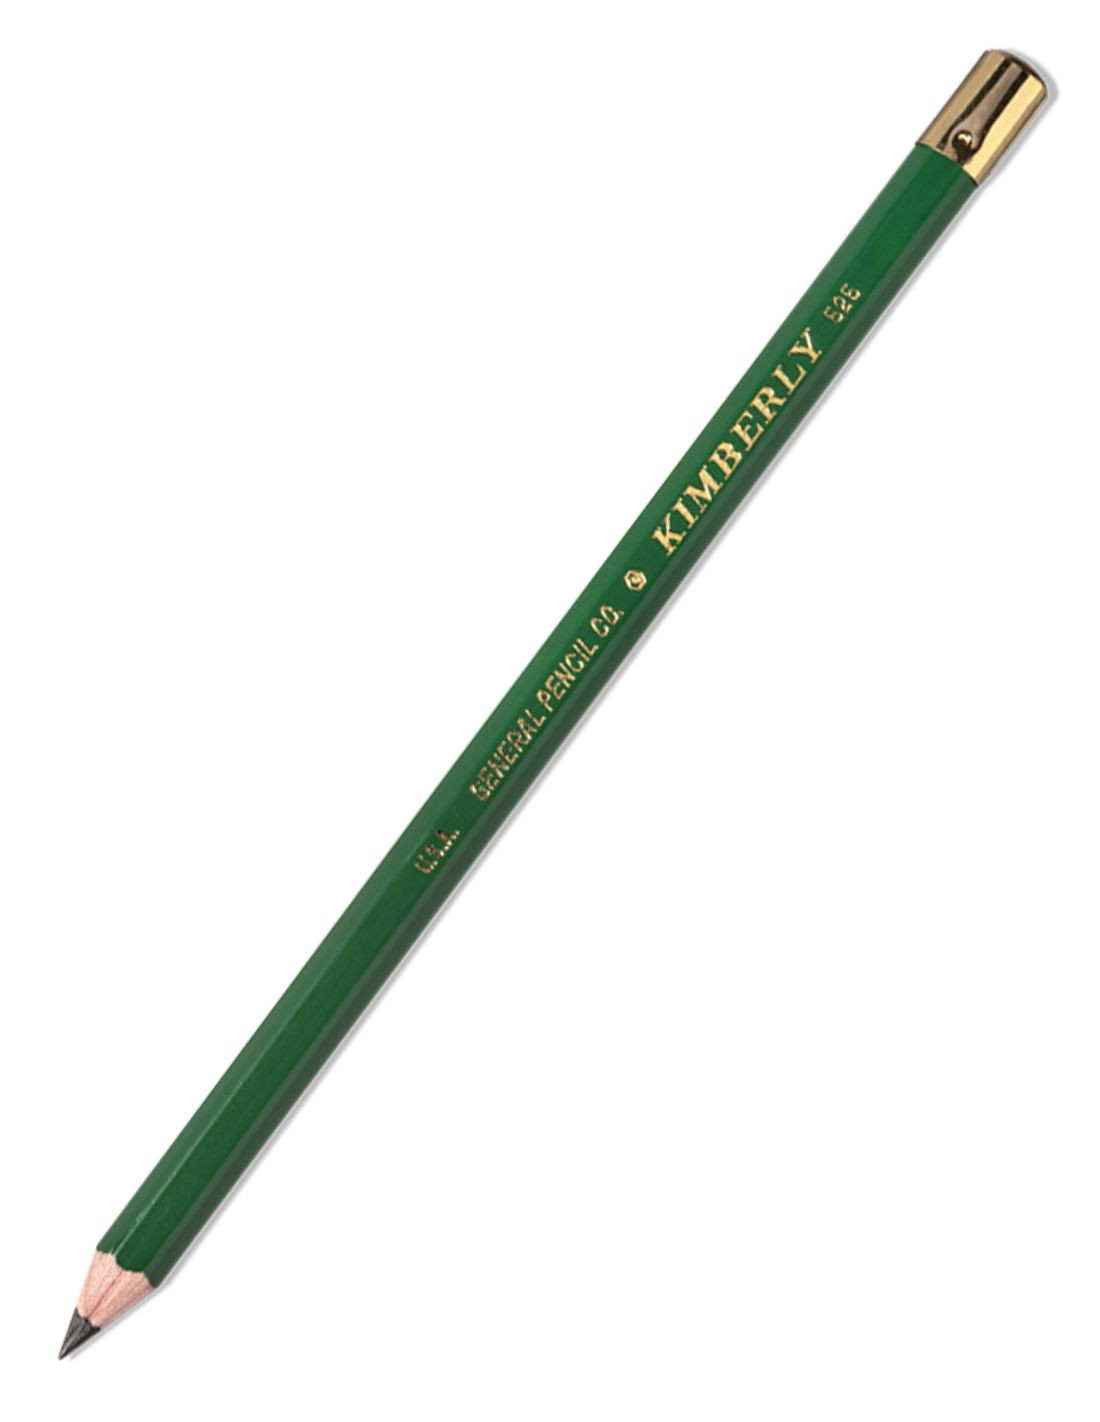 Crayon graphite 7B - Kimberly 525 - General Pencil Company|Papeterie Makkura